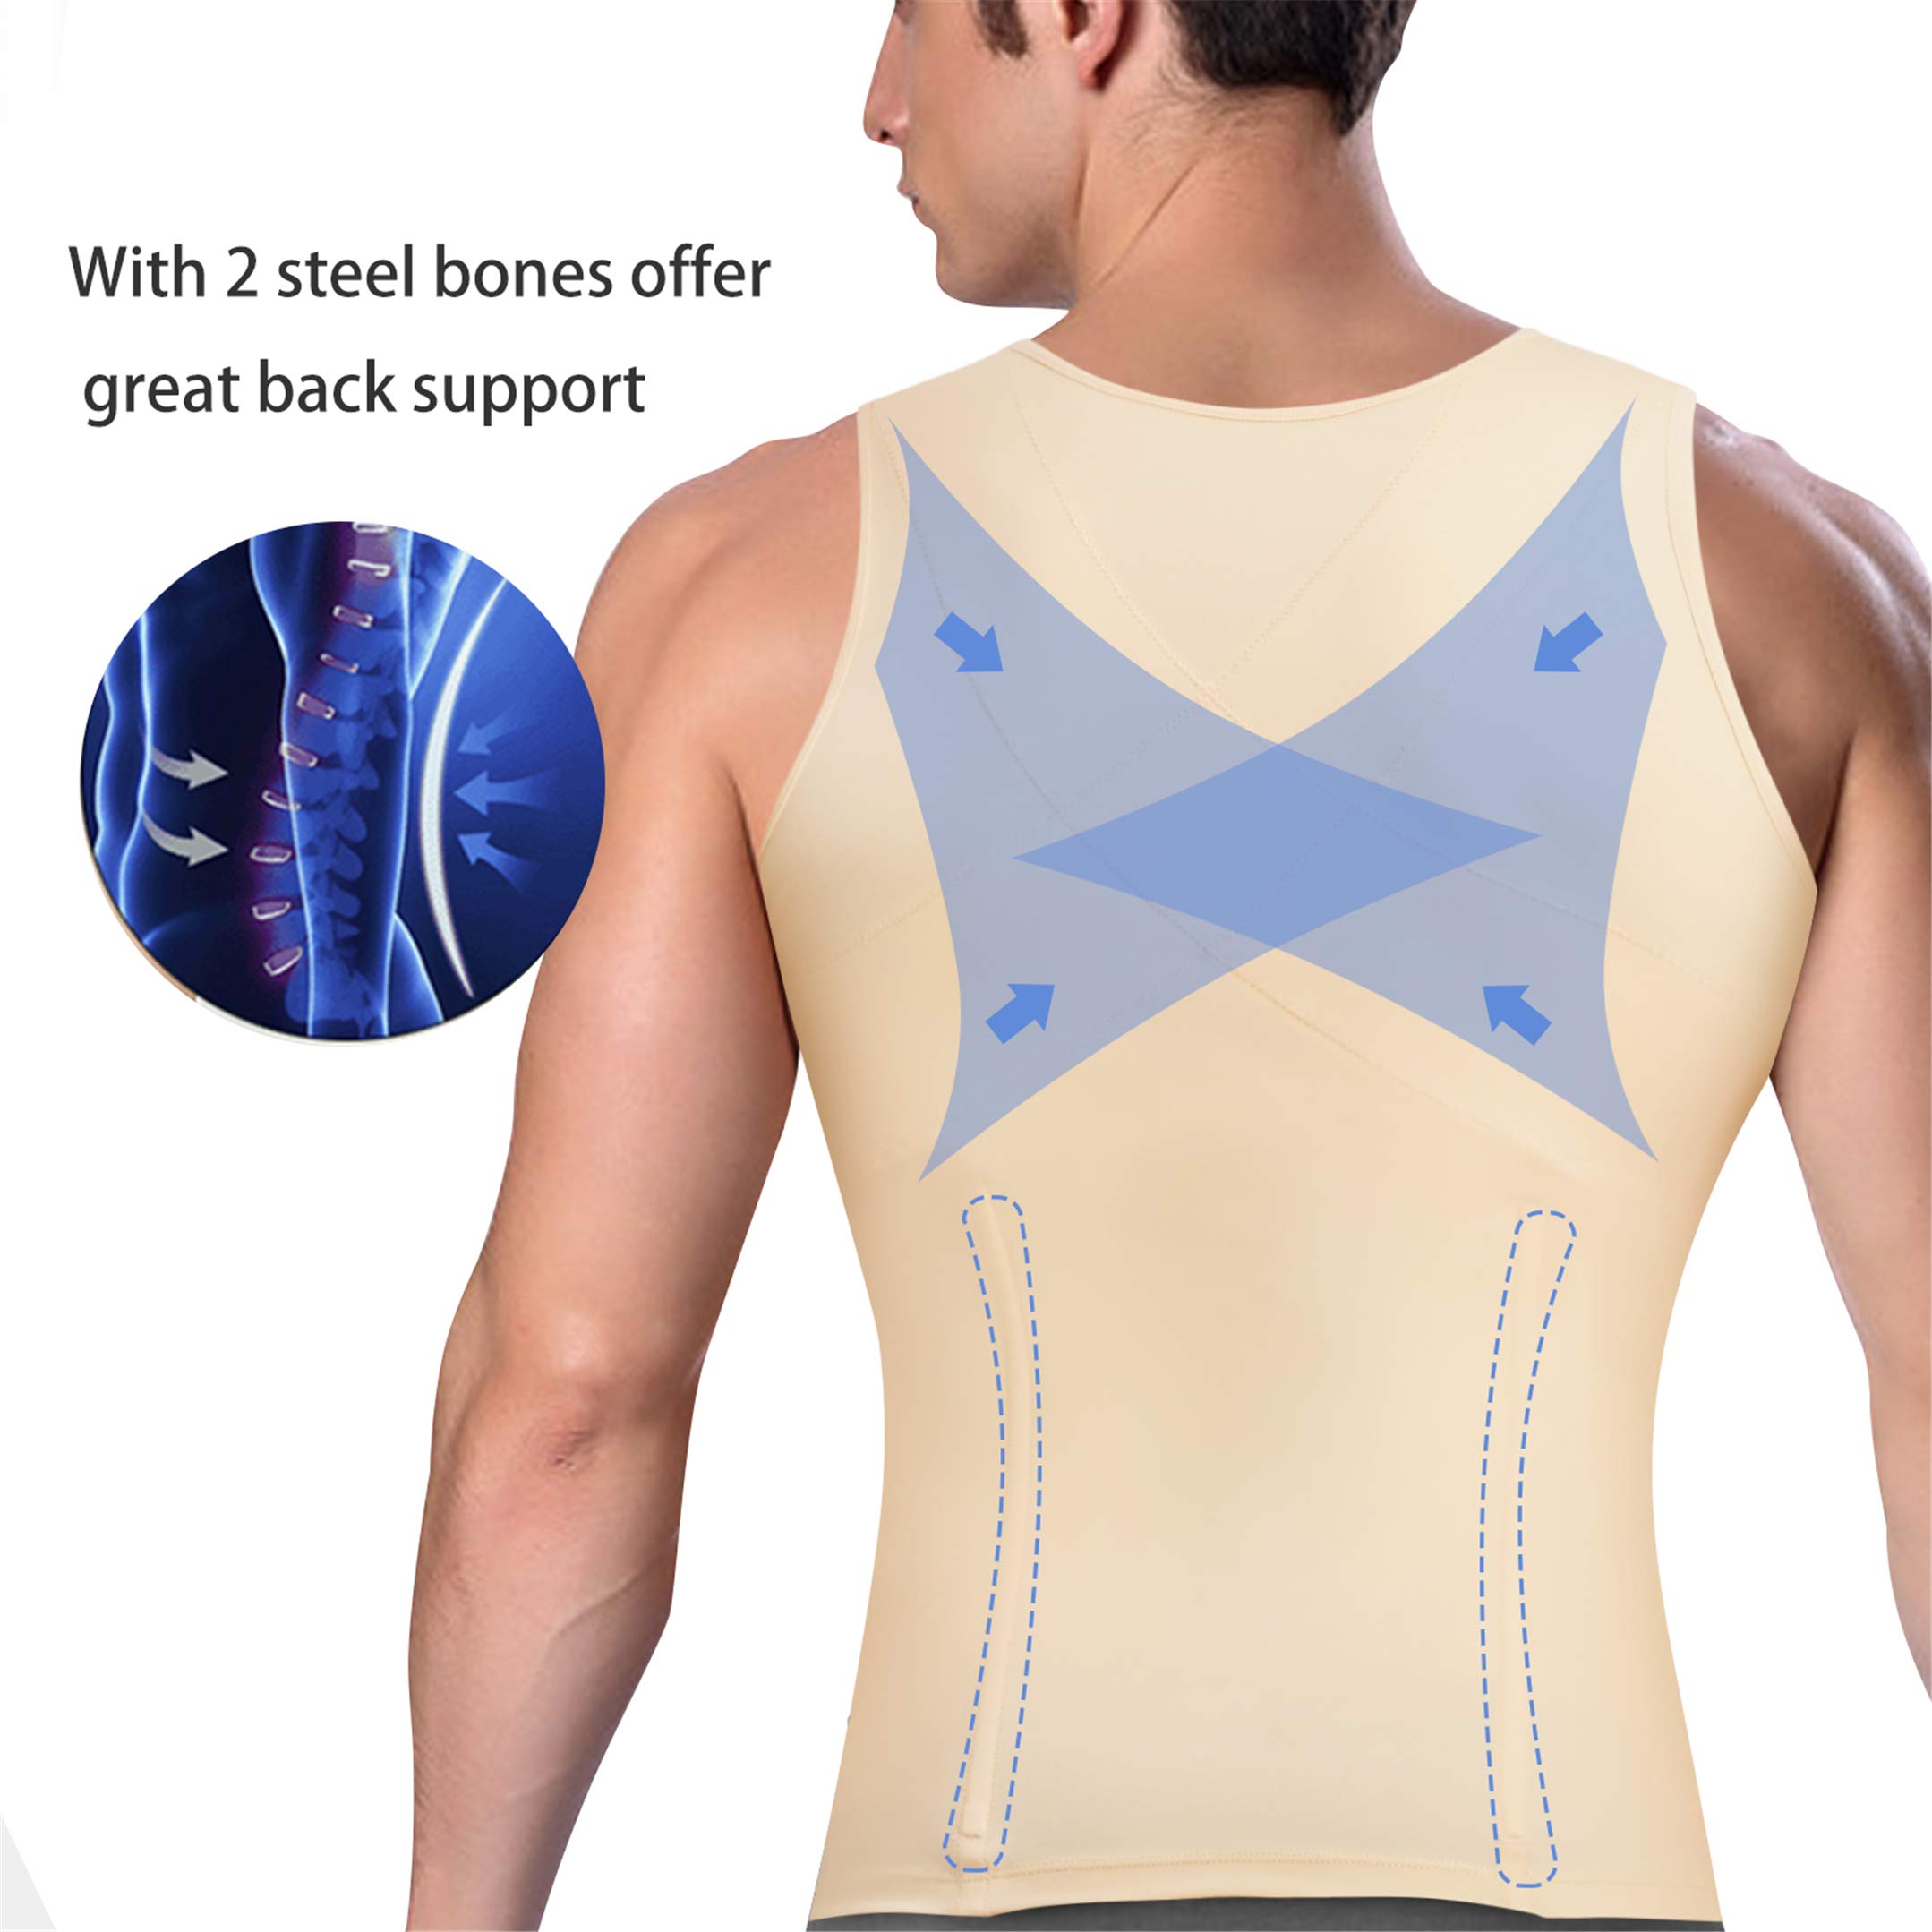 Eleady Men's Compression Shirt Undershirt Slimming Body Shaper Athletic Workout Shirts Tank Top Sport Vest with Zipper (Beige, Medium)